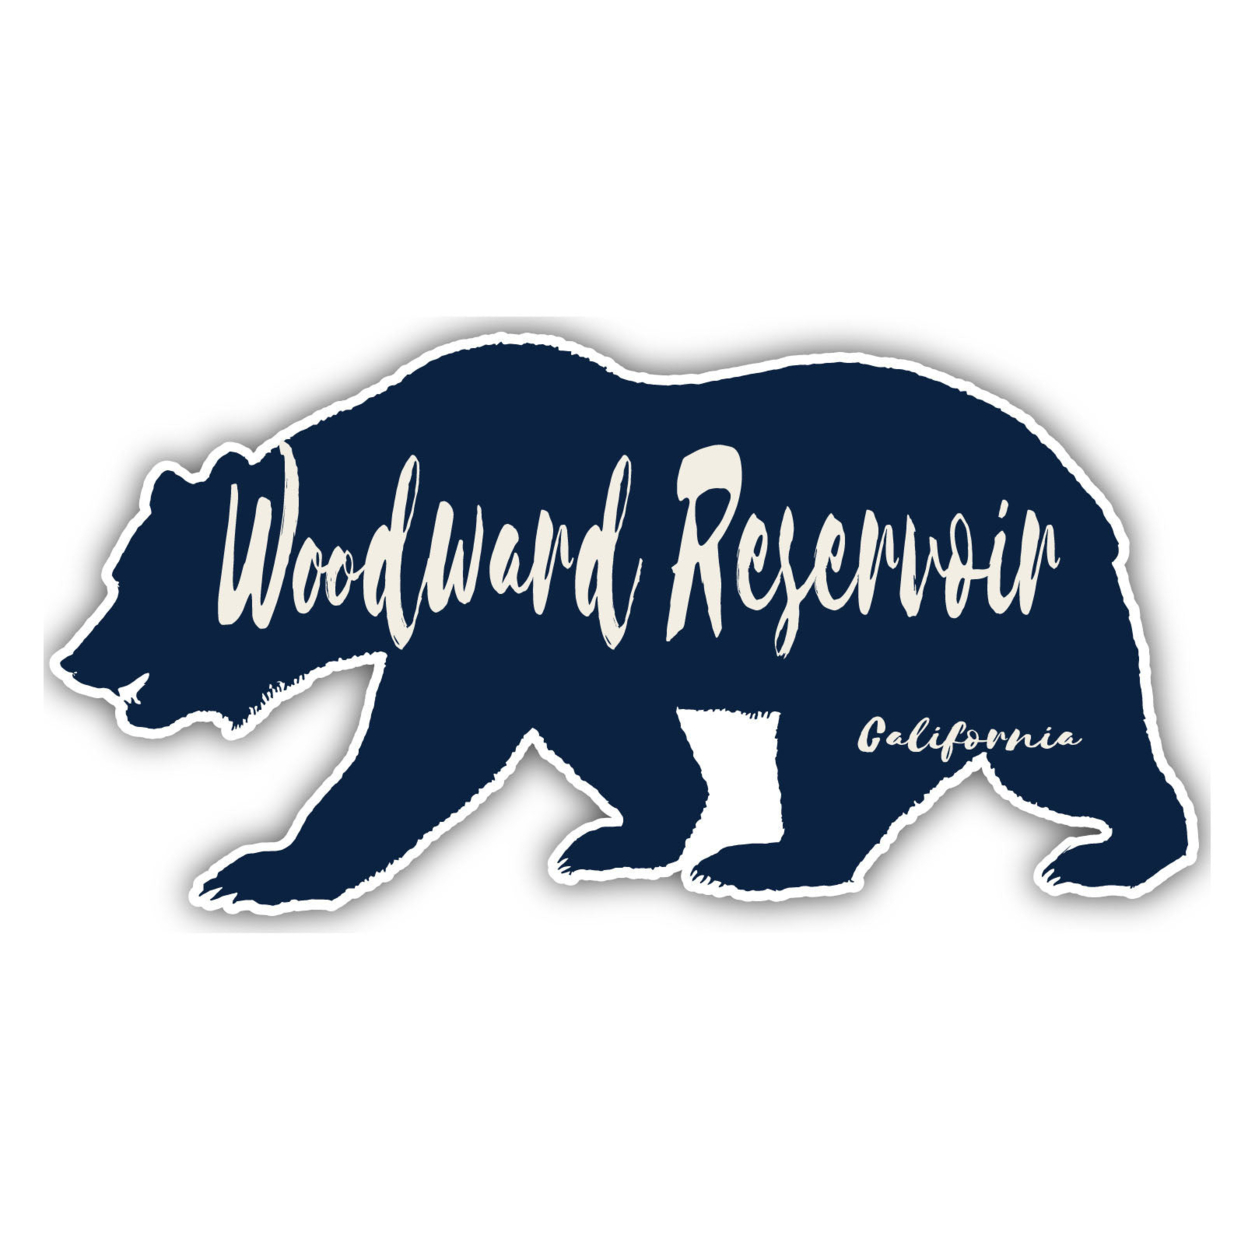 Woodward Reservoir California Souvenir Decorative Stickers (Choose Theme And Size) - Single Unit, 4-Inch, Bear